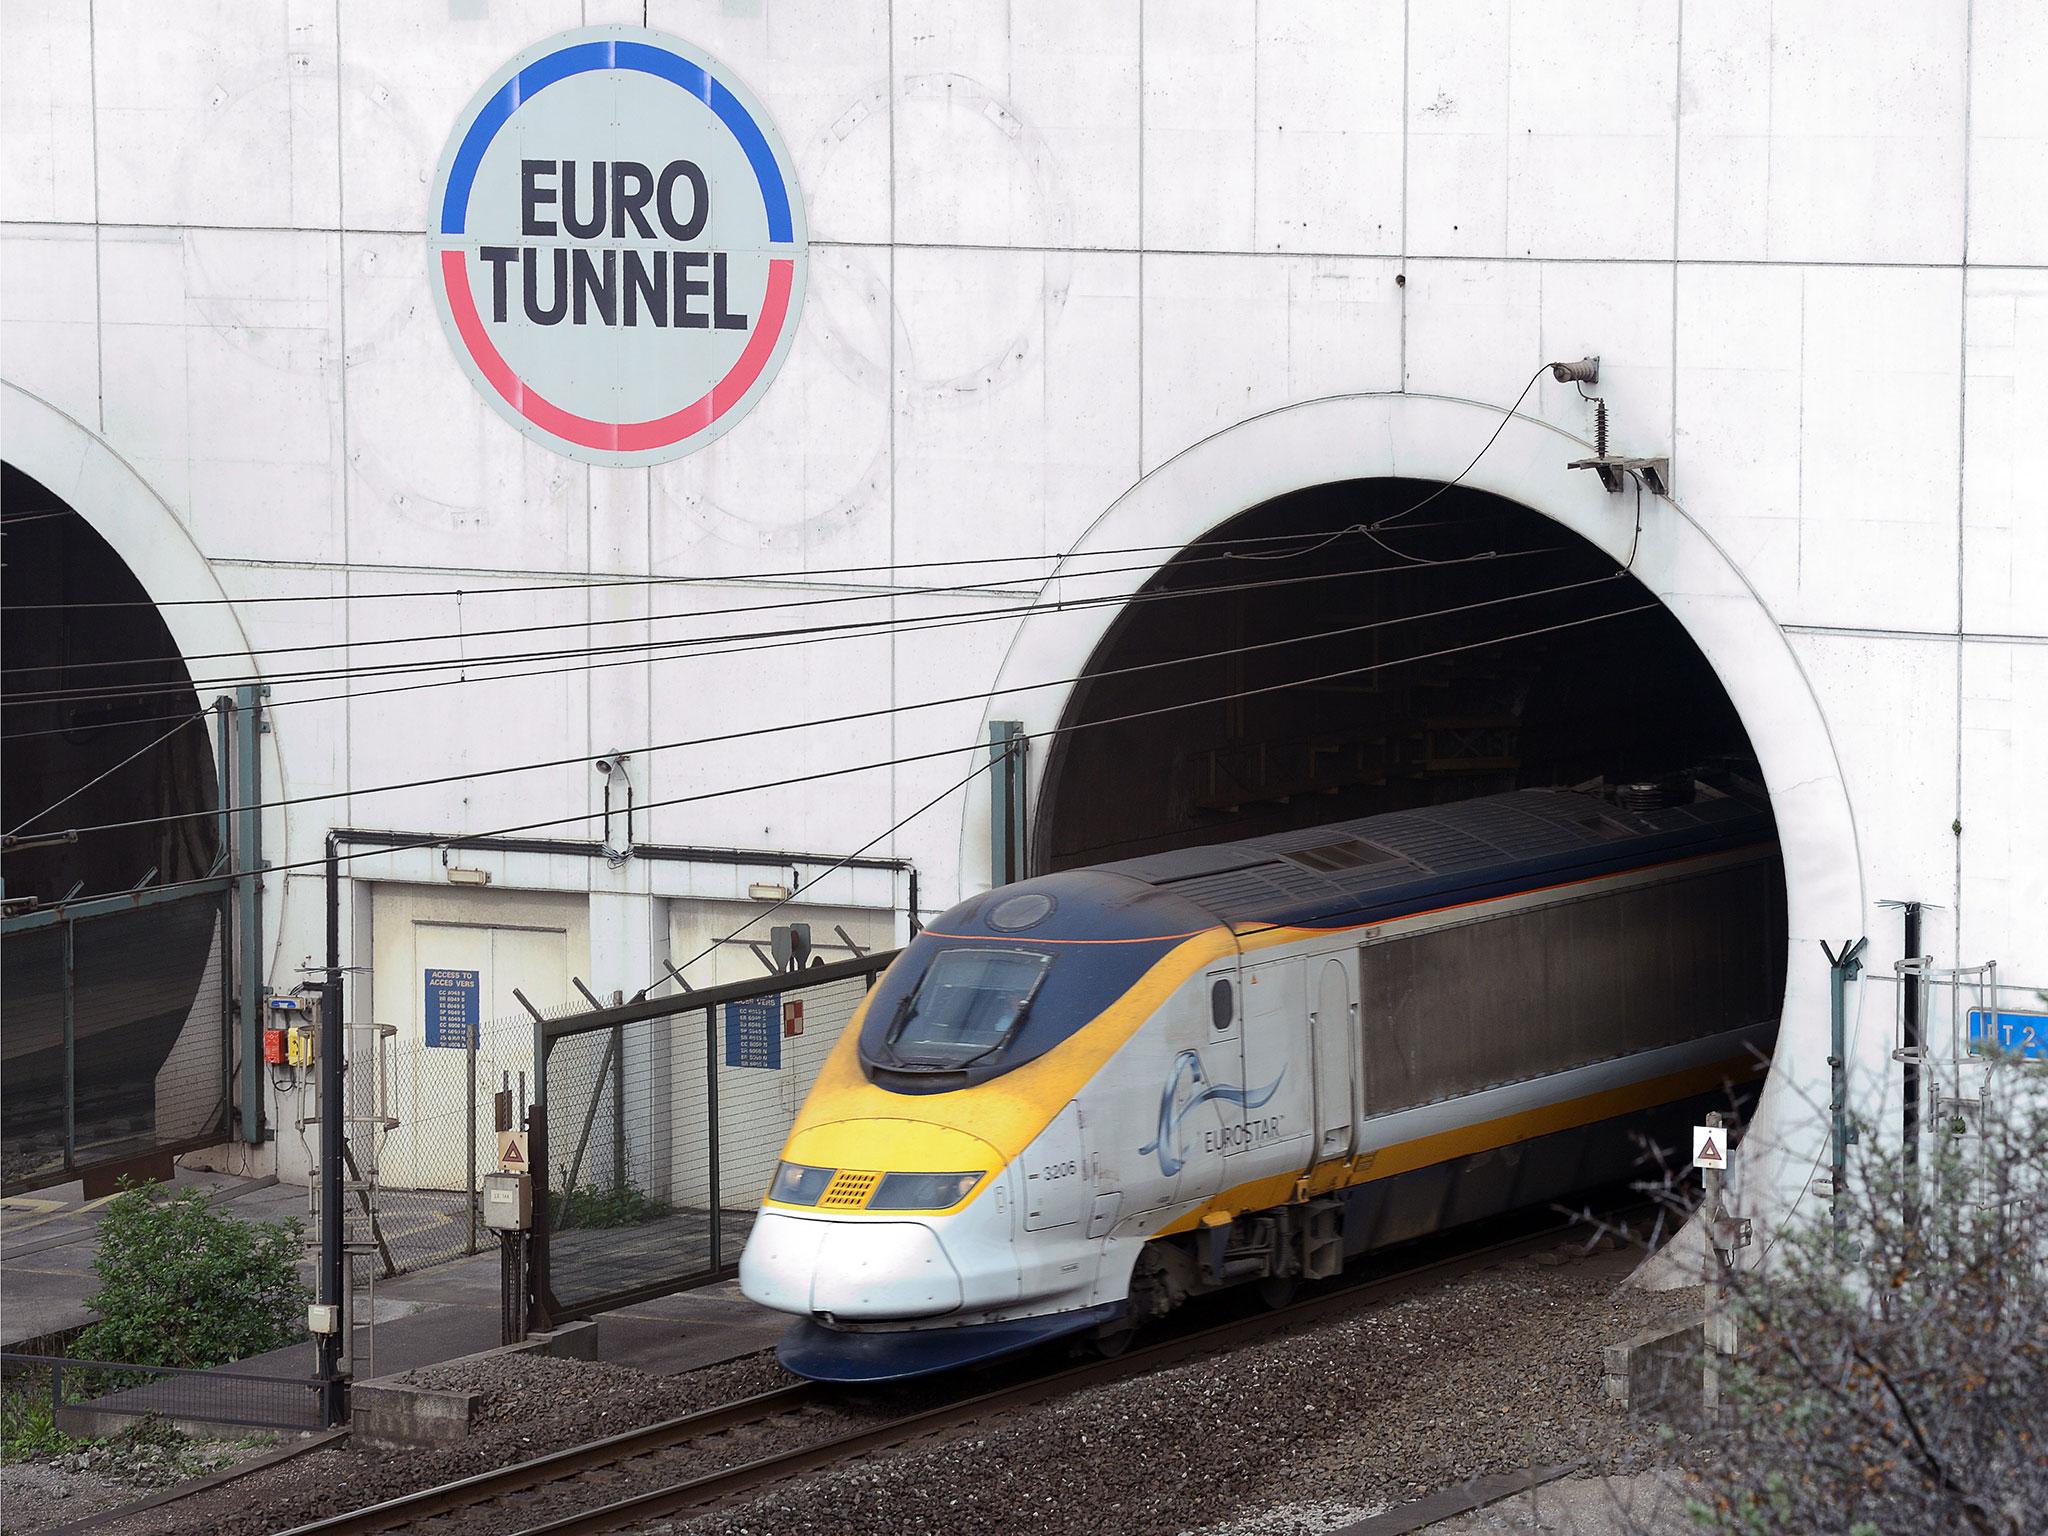 Eurotunnel - Case Study - Markettiers - broadcast specialist creative agency